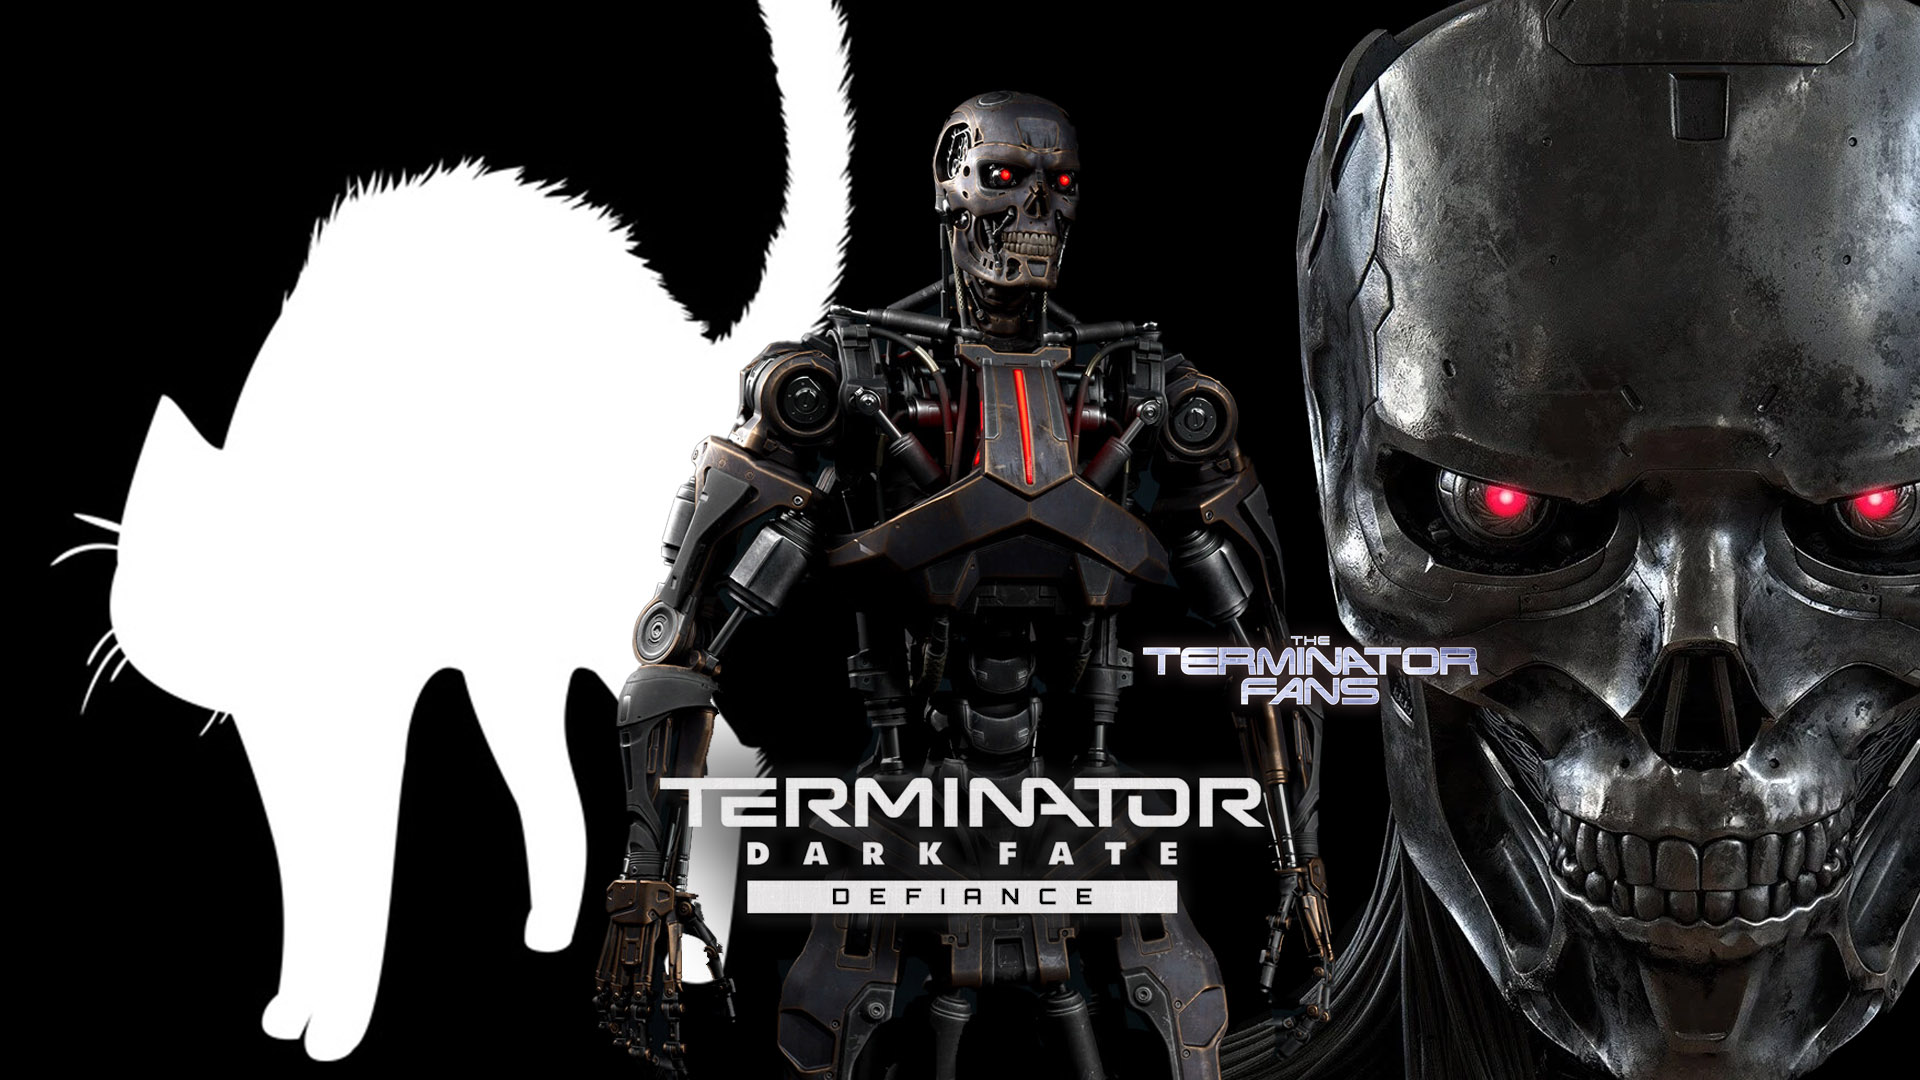 Terminator dark fate defiance интеграторы. Терминатор Dark Fate игра. RTS Terminator: Dark Fate: Defiance. Легион Терминатор.